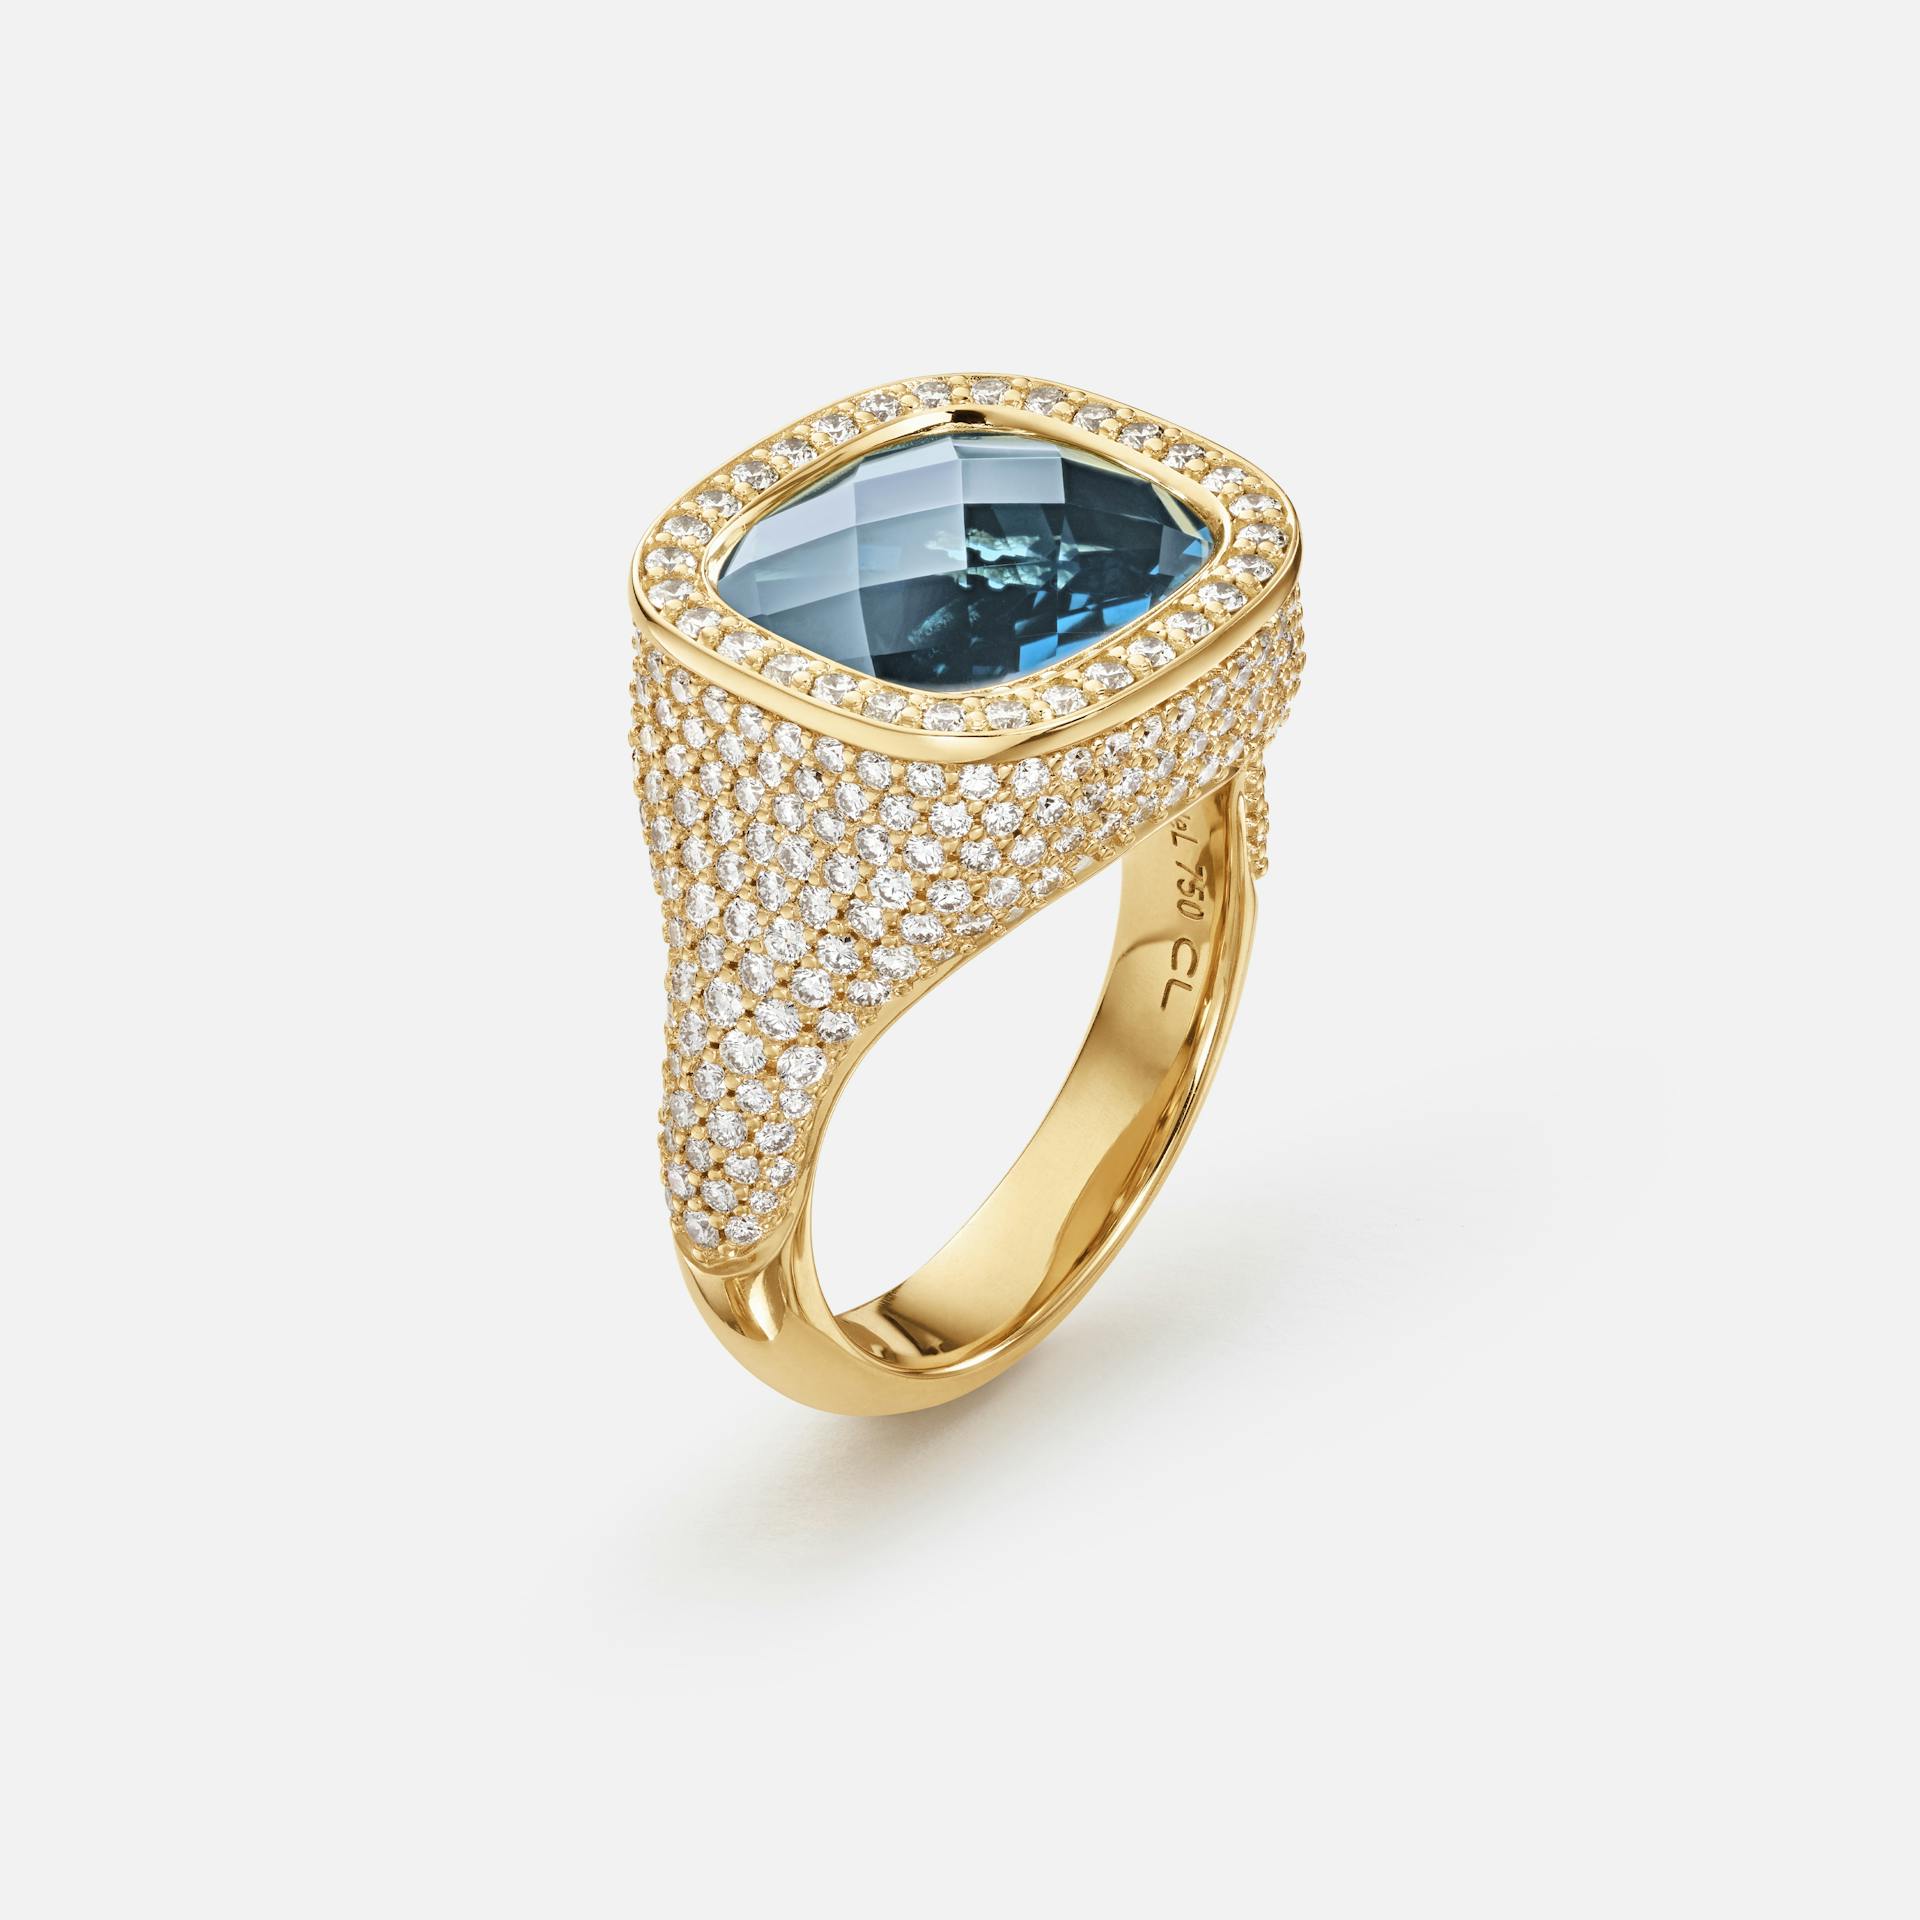 Cushion Ring in 18 Karat Yellow Gold, Diamonds & London Blue Topaz  |  Ole Lynggaard Copenhagen 